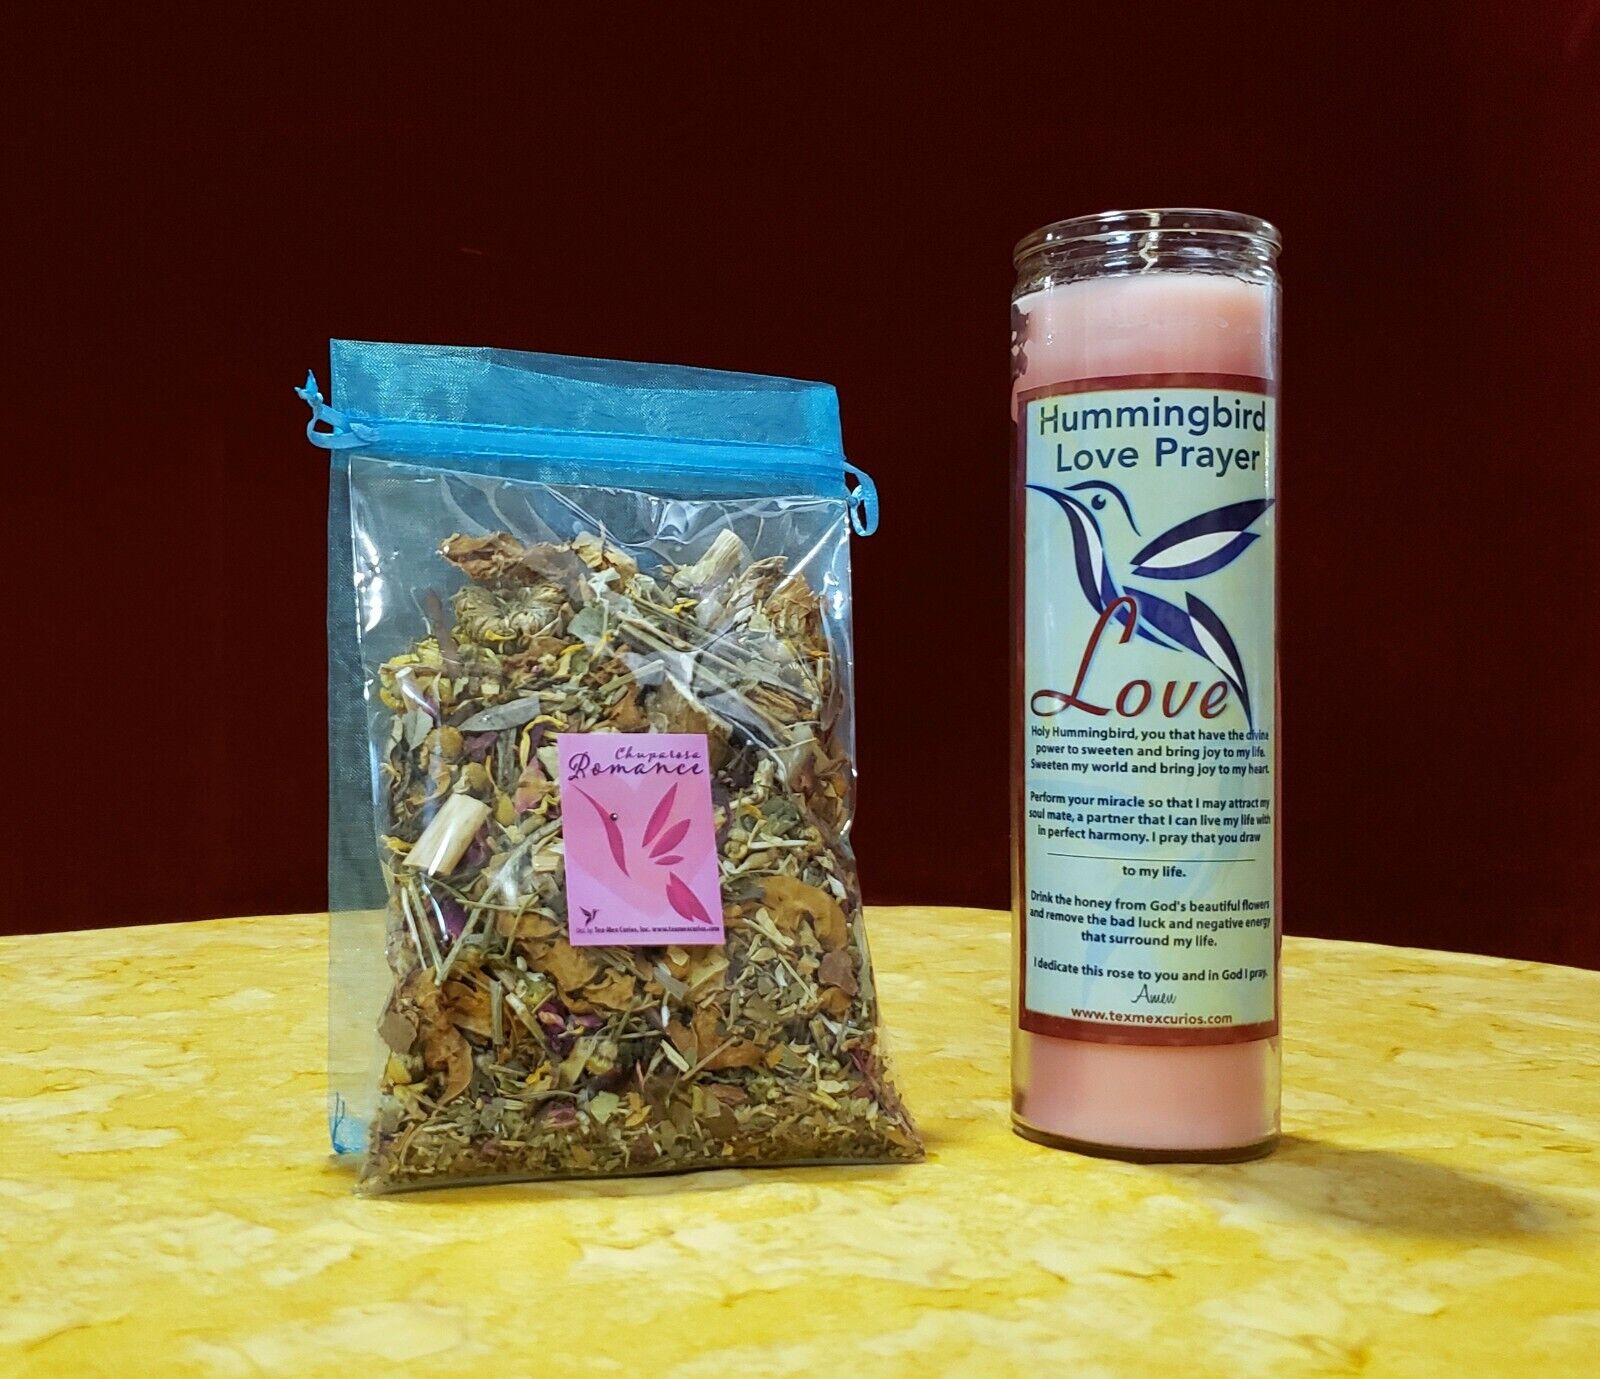 Hummingbird Love Candle and Herbal Love Bath Set ~ Vela y Bano de la Chuparosa